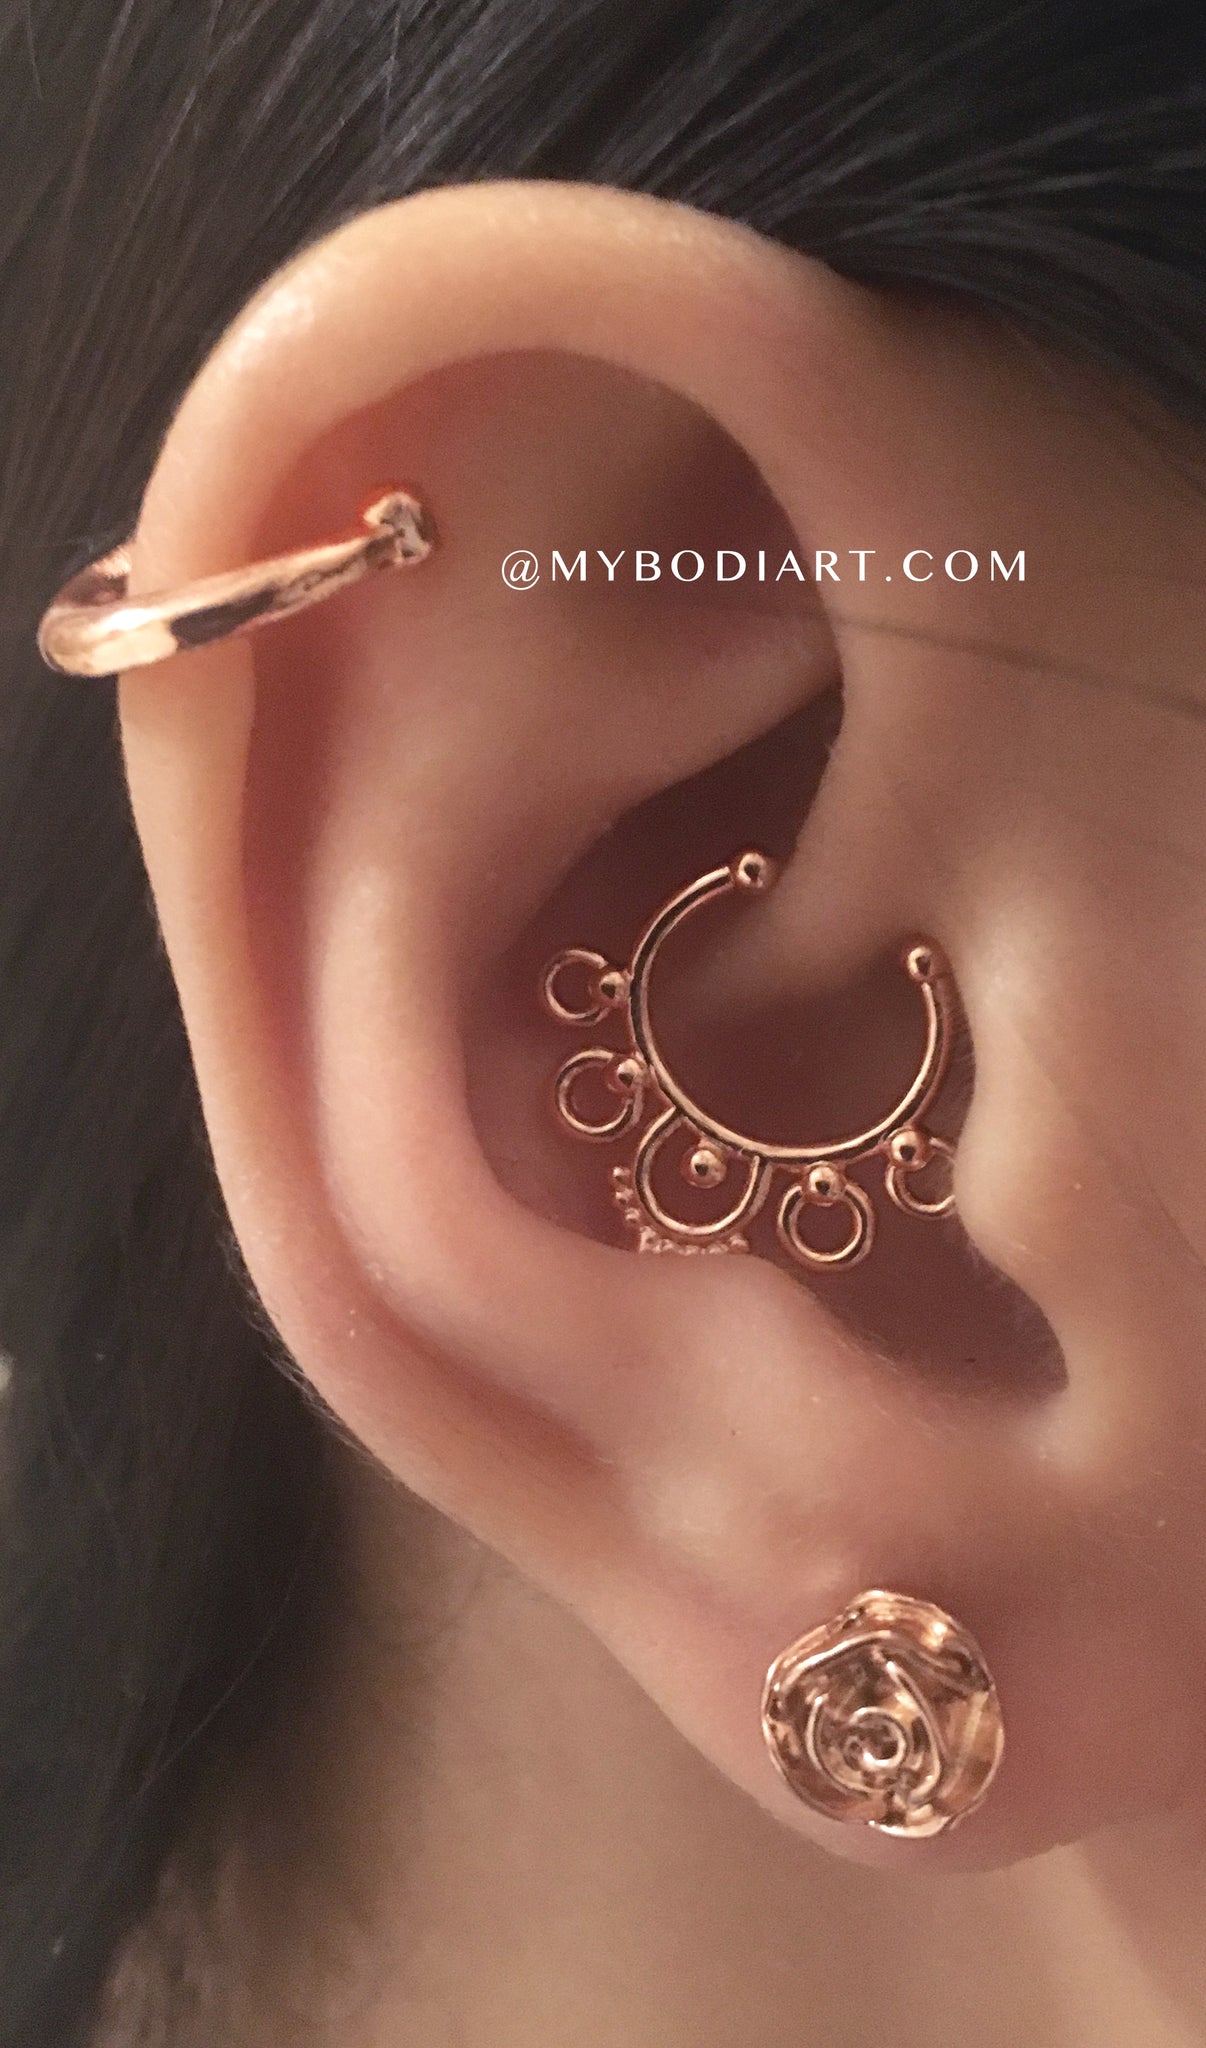 Cute Multiple Ear Piercing Ideas - Rose Gold Earring Jewelry - idées de perçage d’oreille - www.MyBodiArt.com